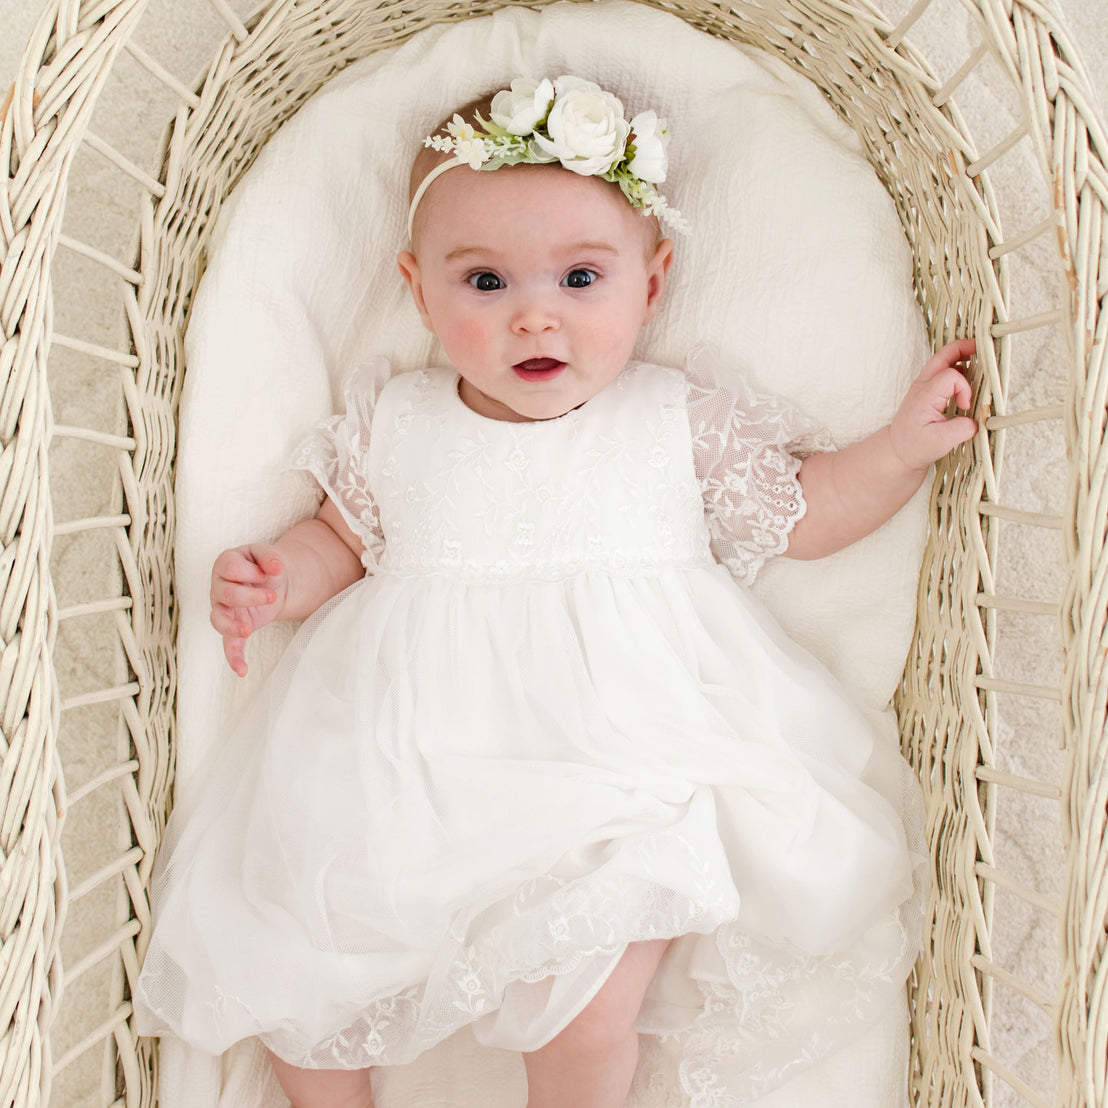 Baby girl wearing Ella romper dress with an Ella Flower Headband.